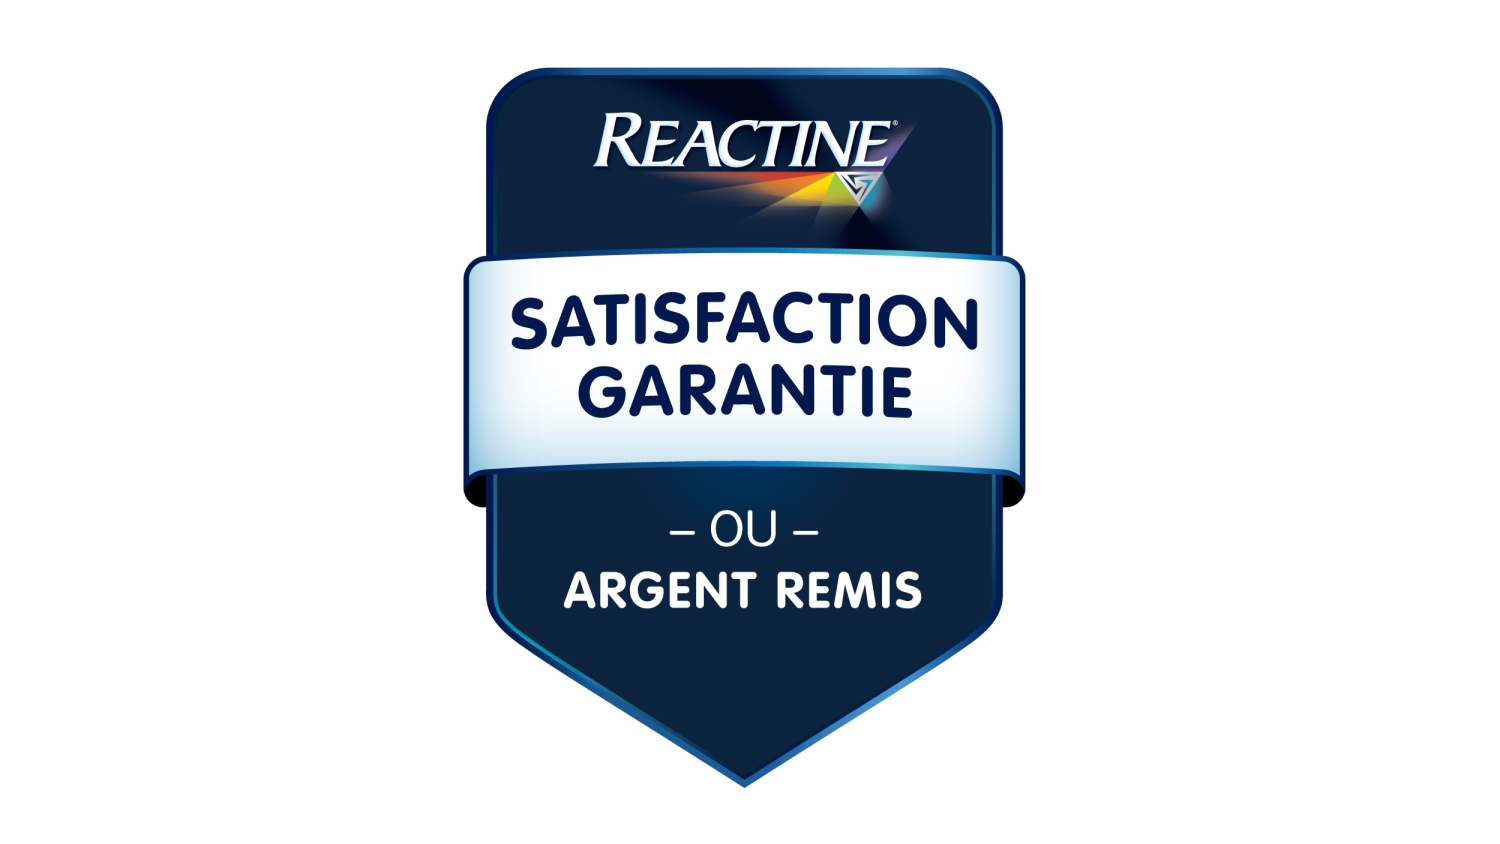 Reactine satisfaction garantie our argent remis logo